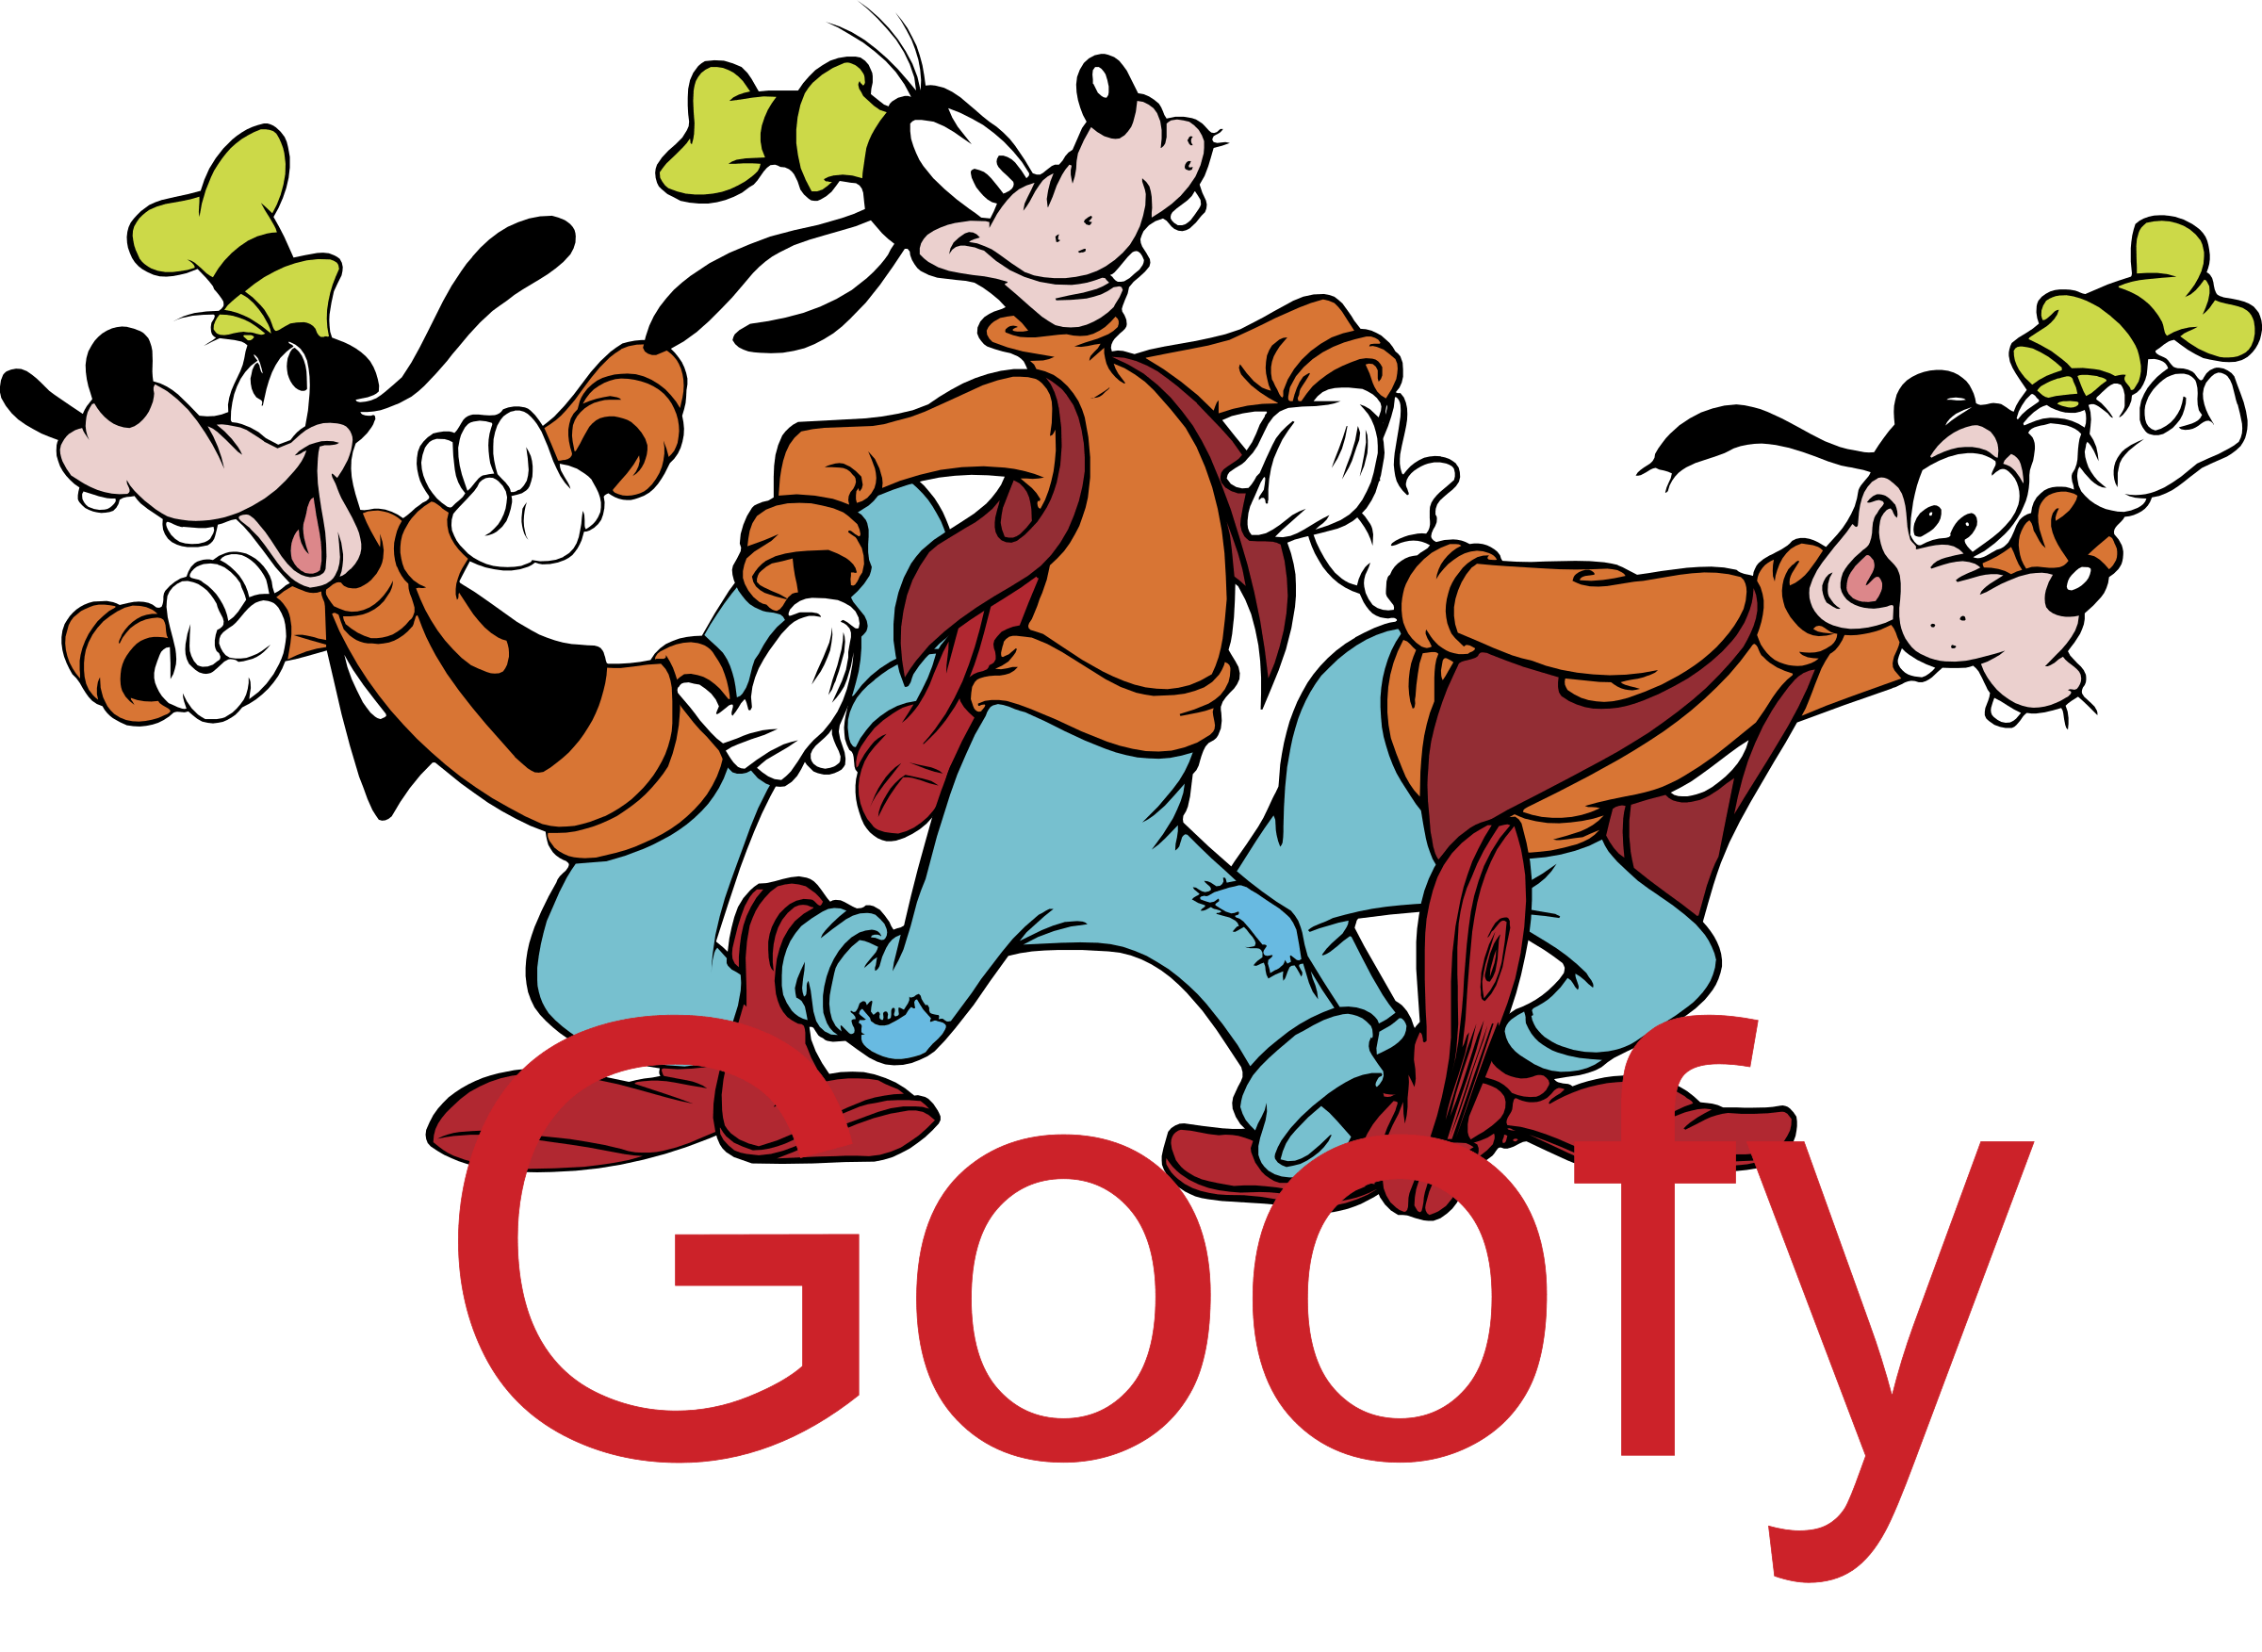 Goofy Logo - Goofy Logo PNG Transparent & SVG Vector - Freebie Supply